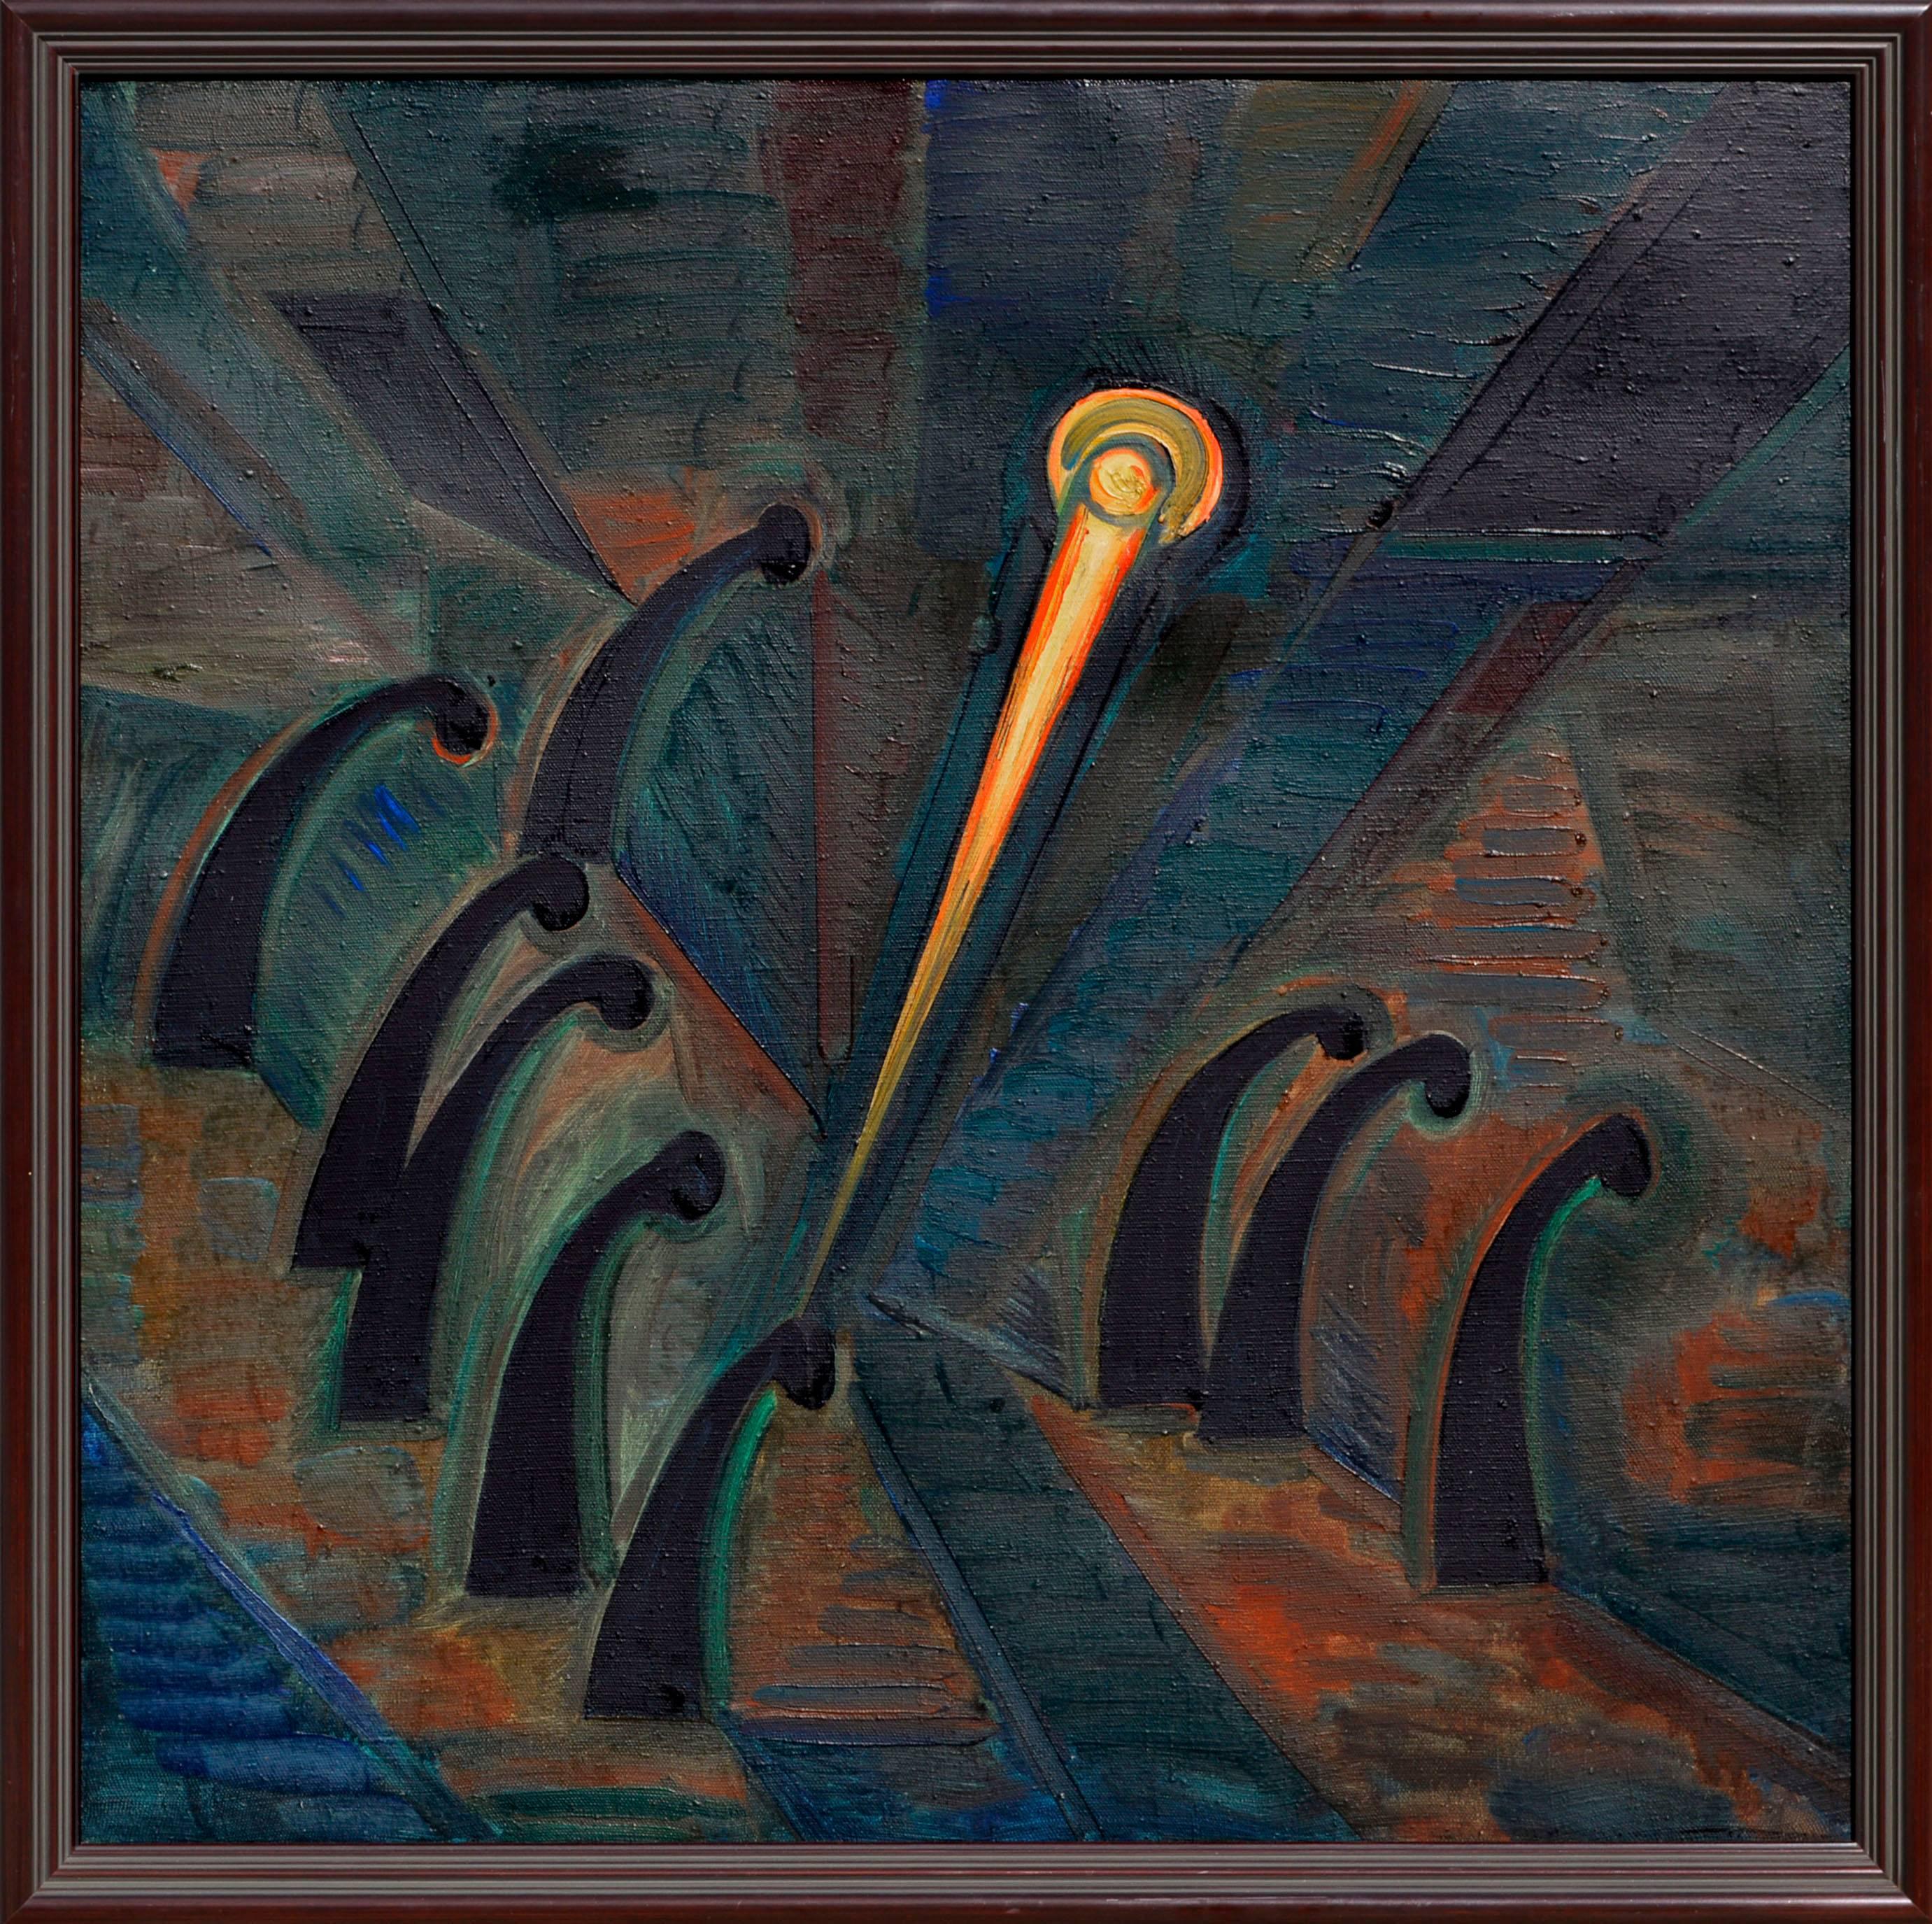 Annamujamed Zaripov Abstract Painting - Requiem, Russian Surrealist Symbolist